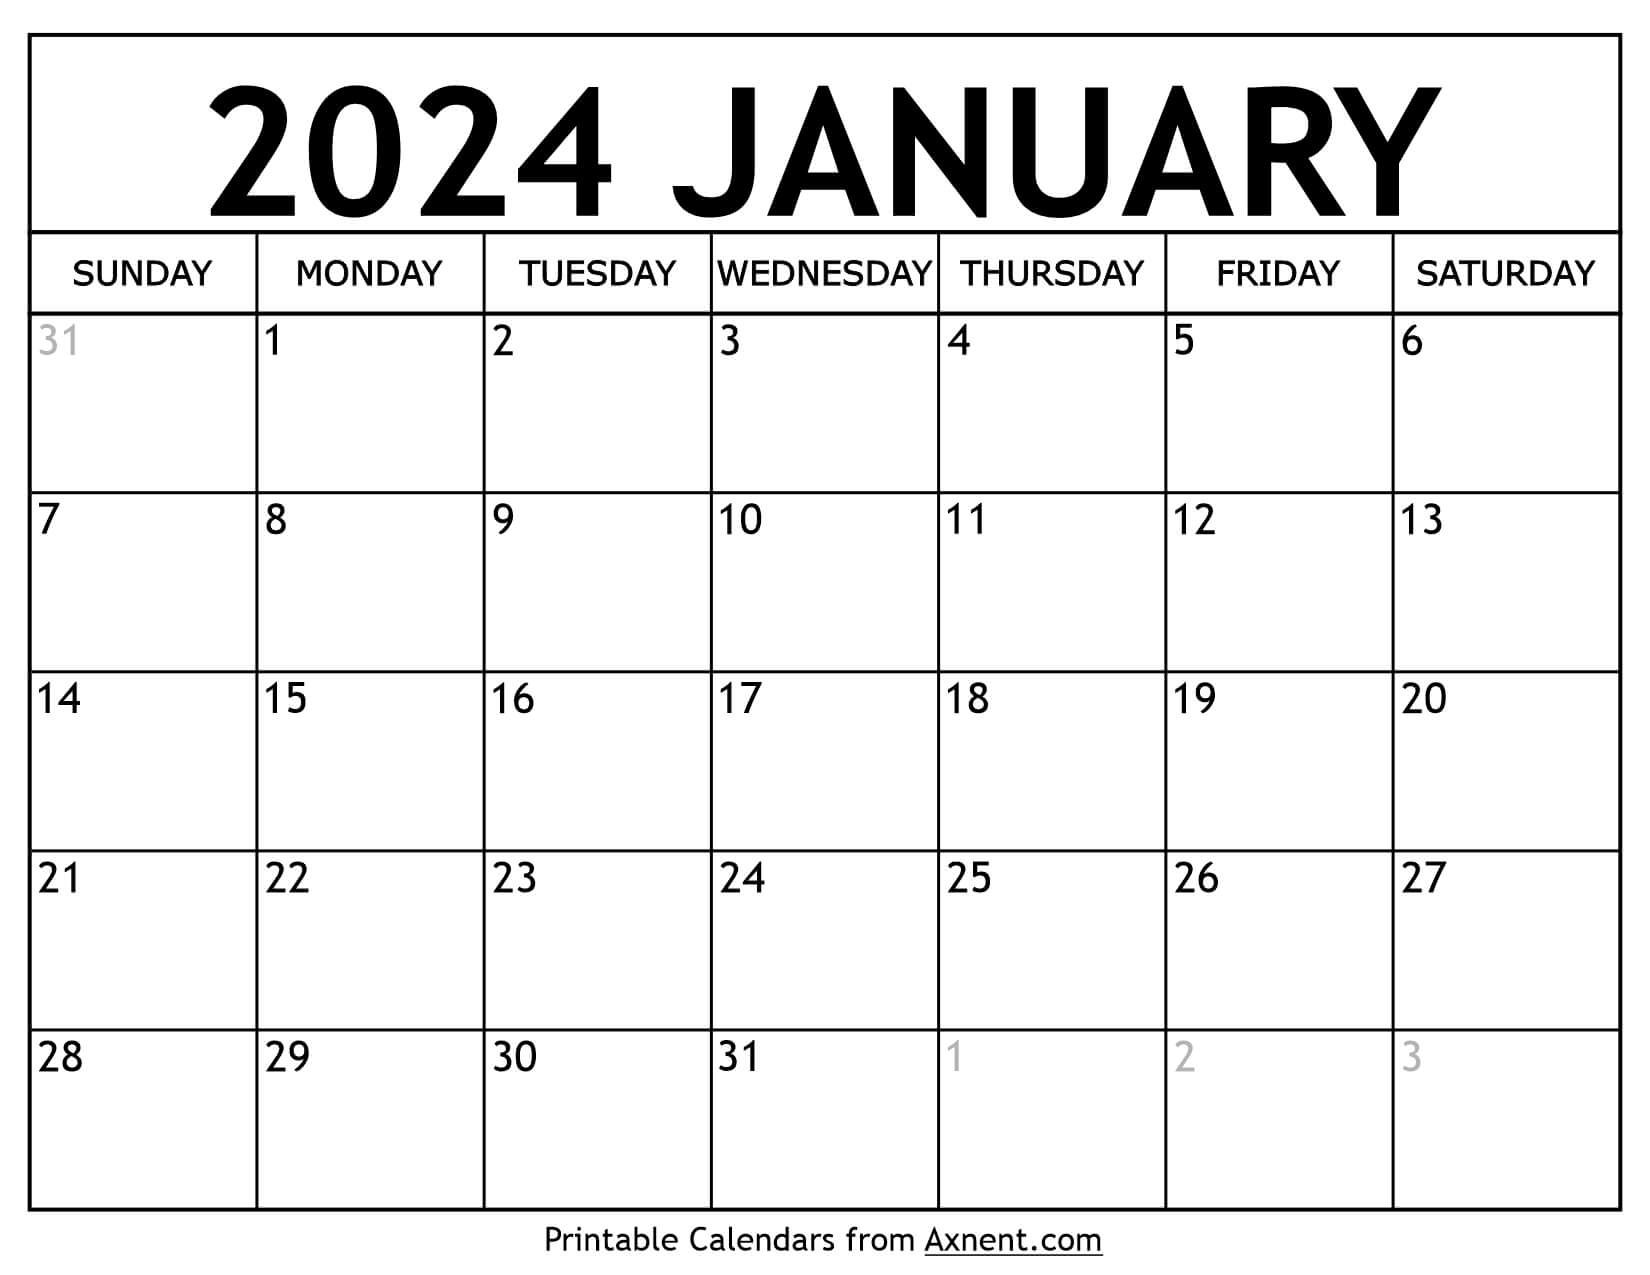 Printable January 2024 Calendar Template - Print Now for Janurary 2024 Printable Calendar